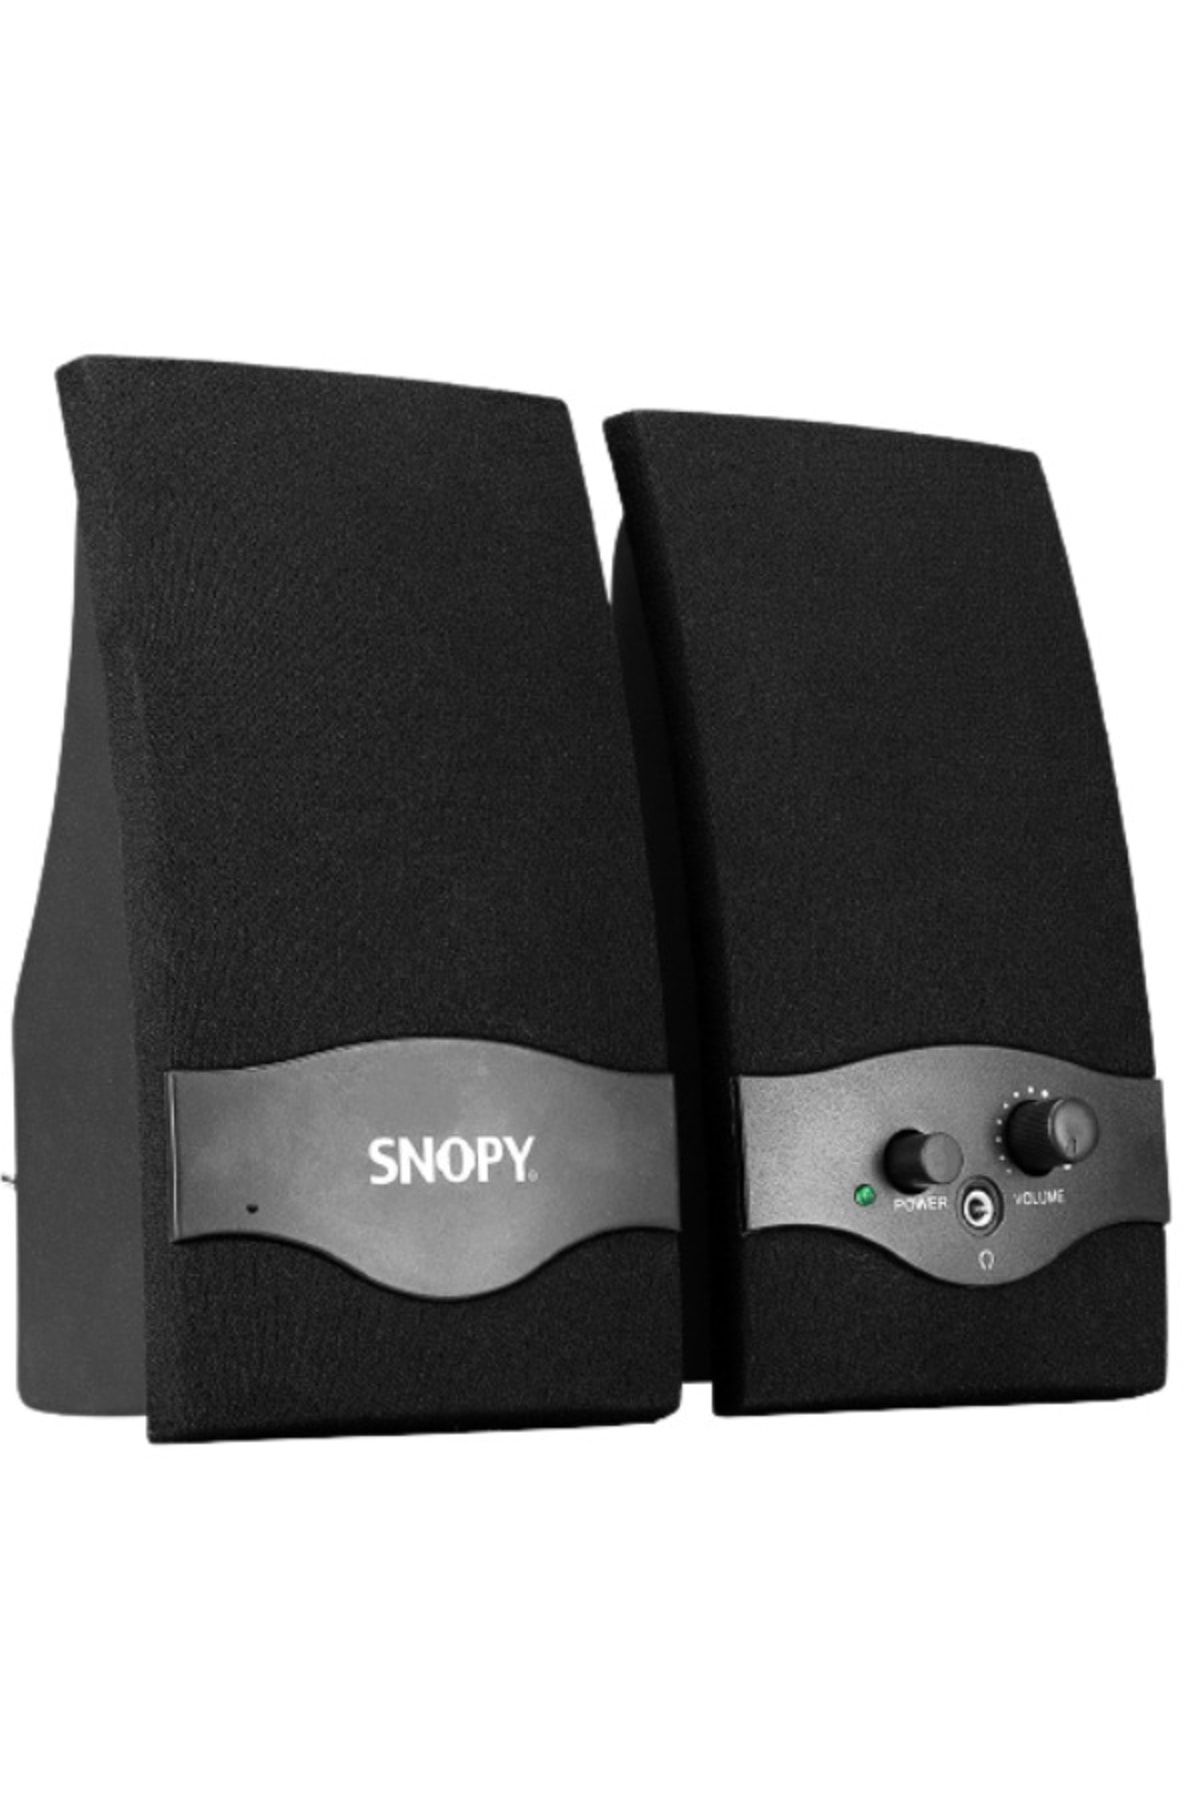 Snopy 2.0 Siyah Usb Pc Speaker Hoparlör Kulaklık Girişli Bilgisayar Hoparlörü